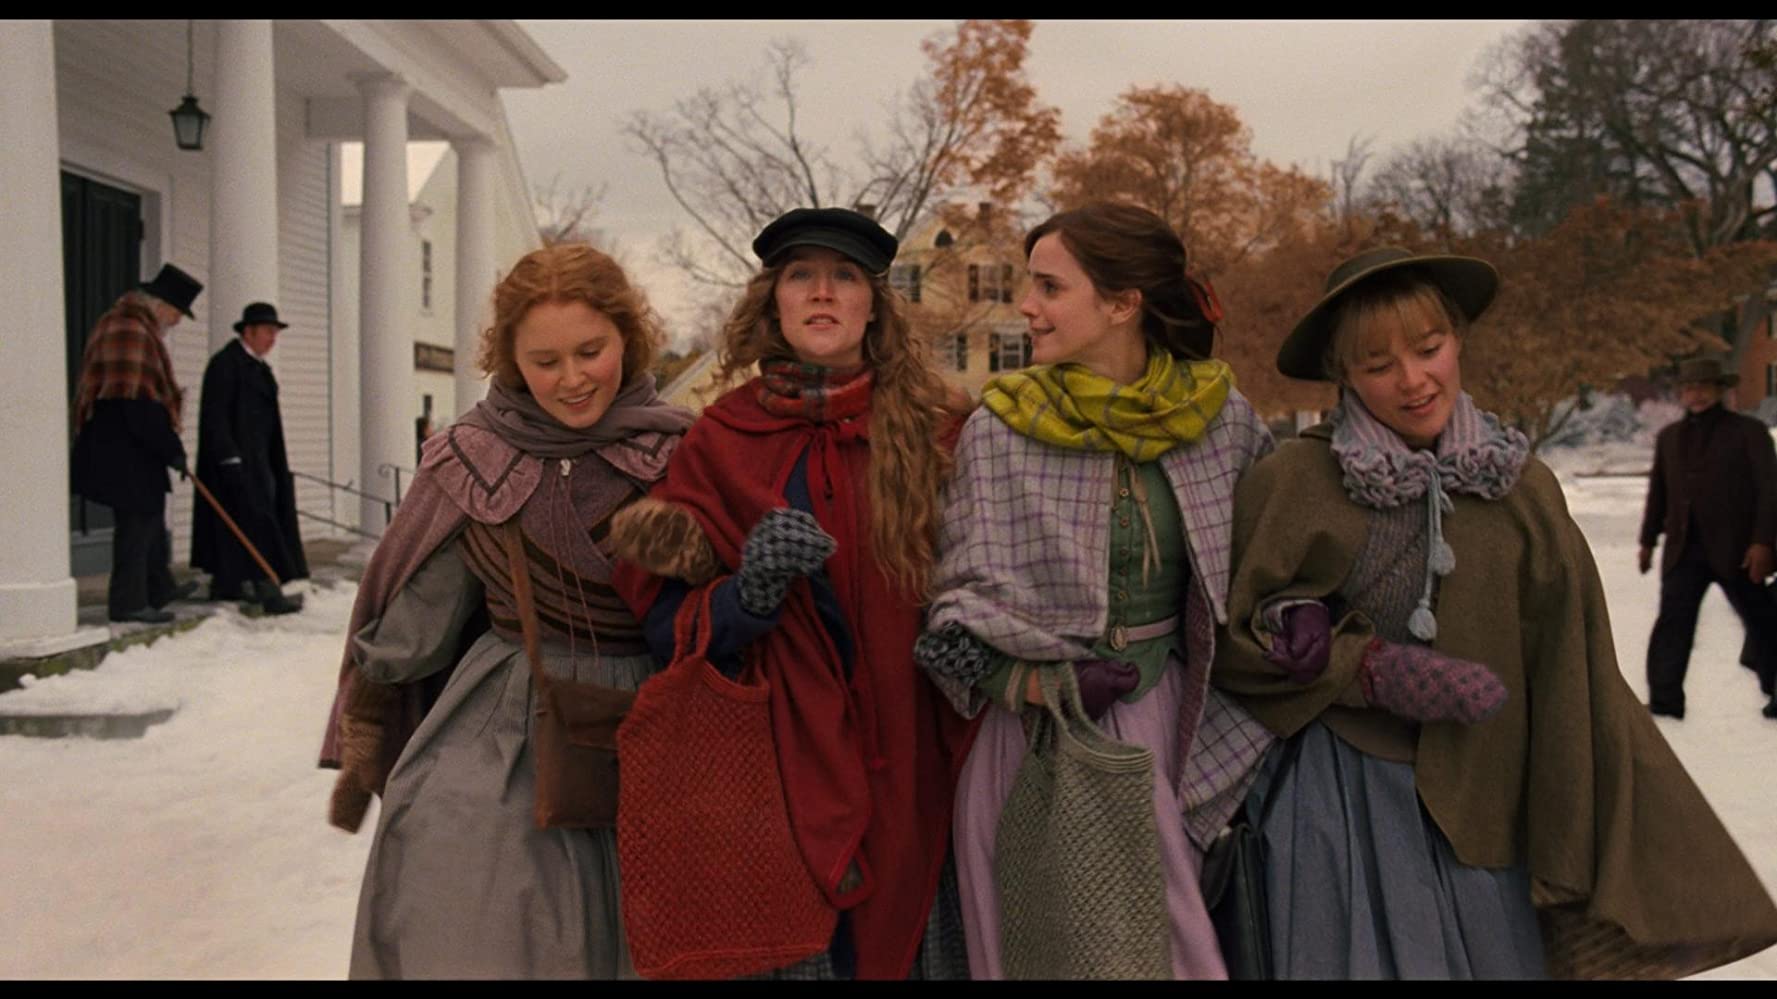 screen shot from the movie Little Women